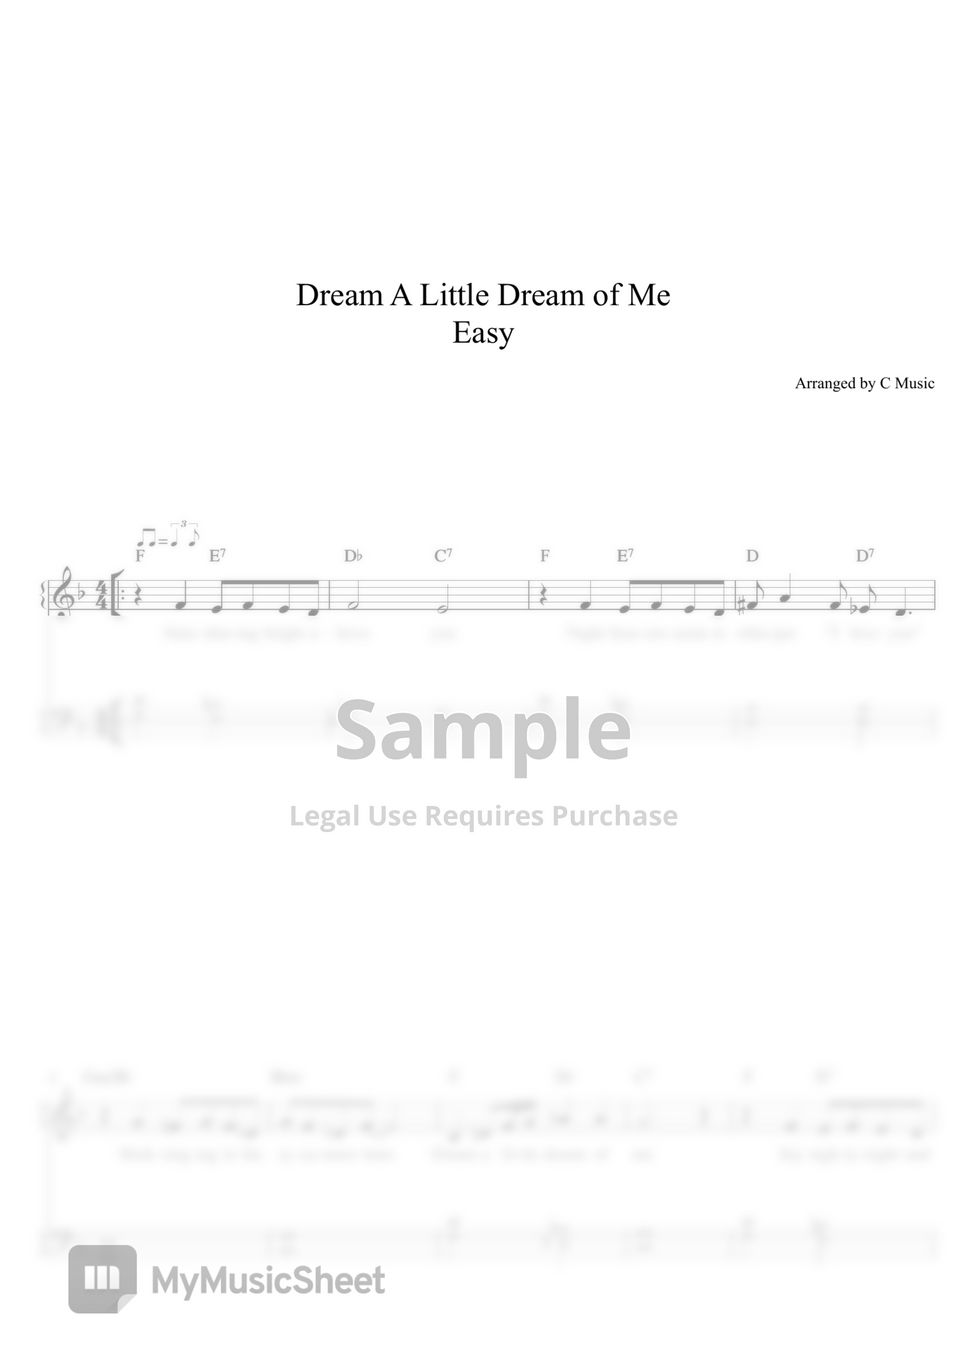 Ernie Birchill - Dream a Little Dream of me (Easy Version) by C Music